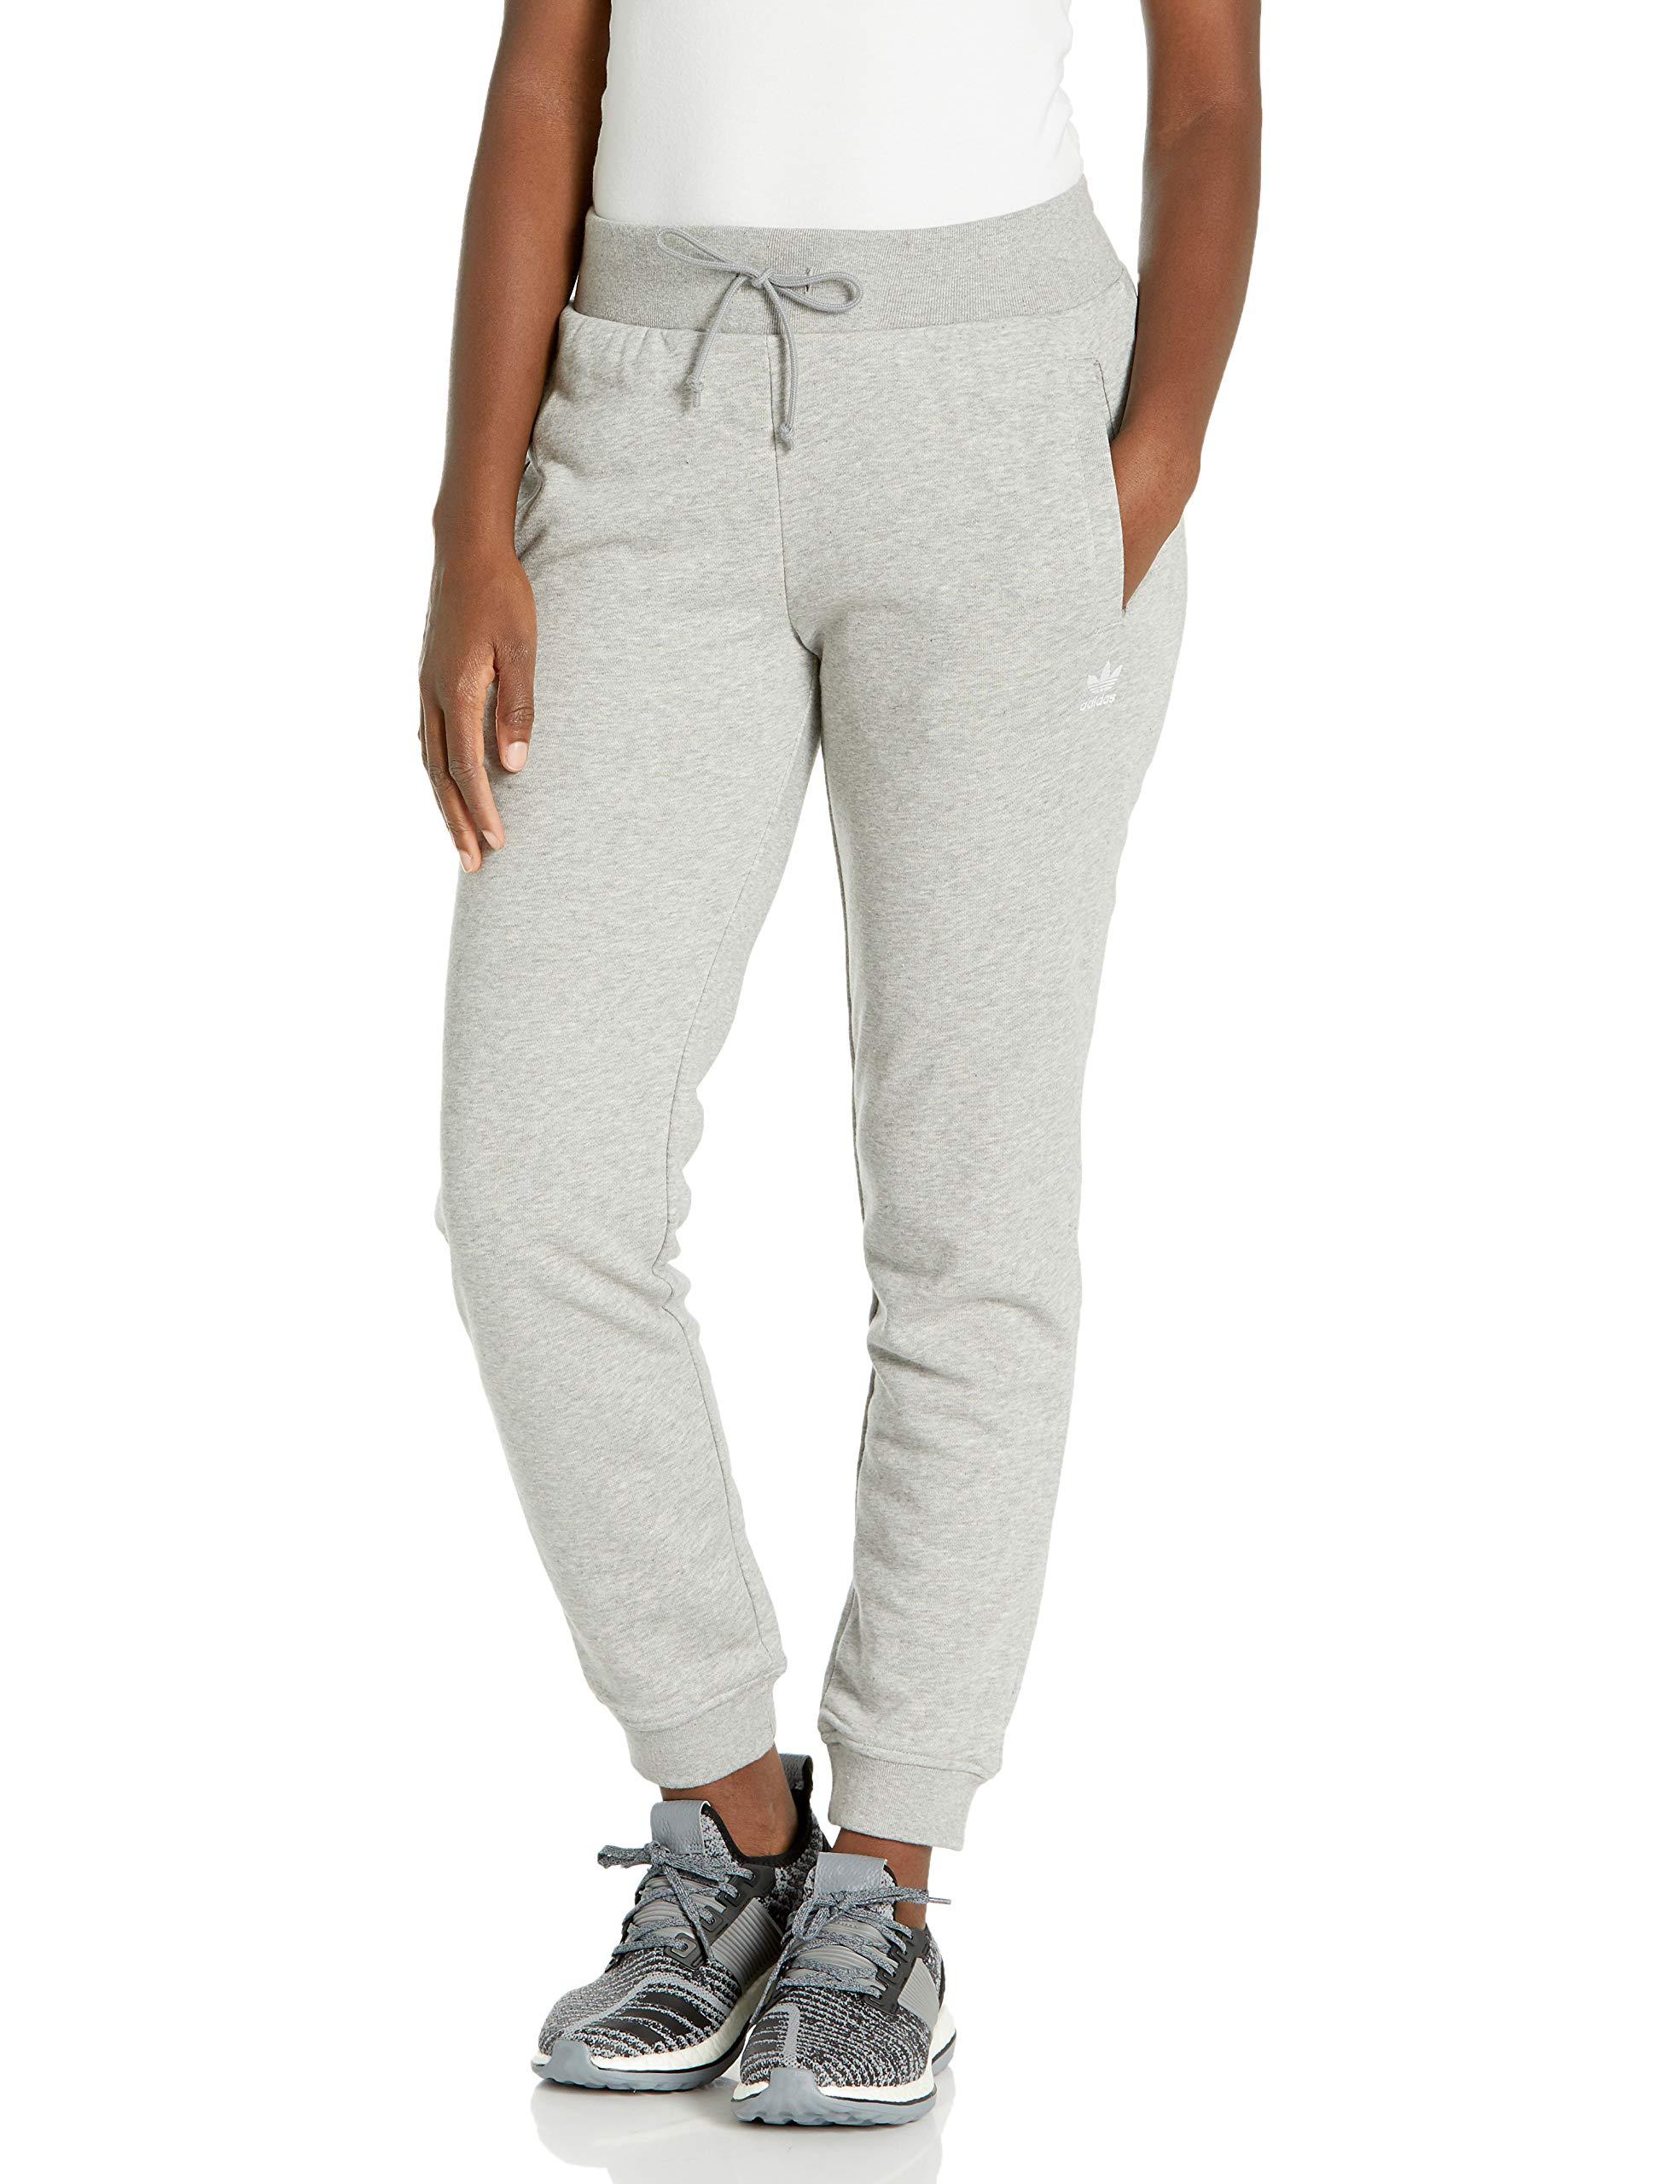 adidas Originals Womens Track Pants Medium Grey Heather Small in Gray ...